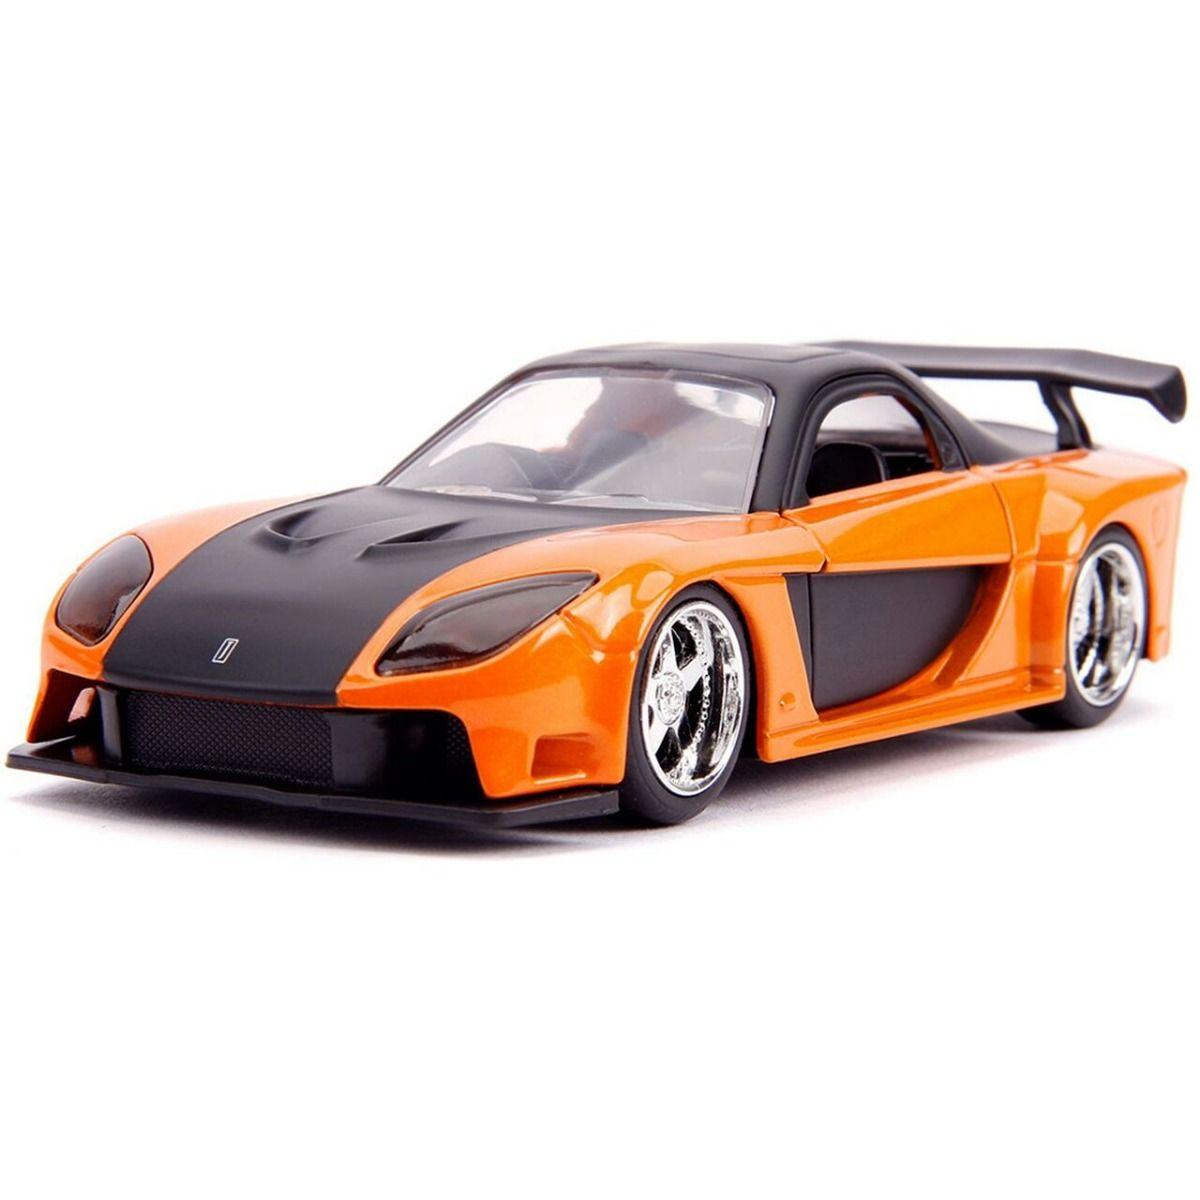 JAD30736 Fast and Furious - Han's Mazda RX-7 1:32 Hollywood Ride - Jada Toys - Titan Pop Culture